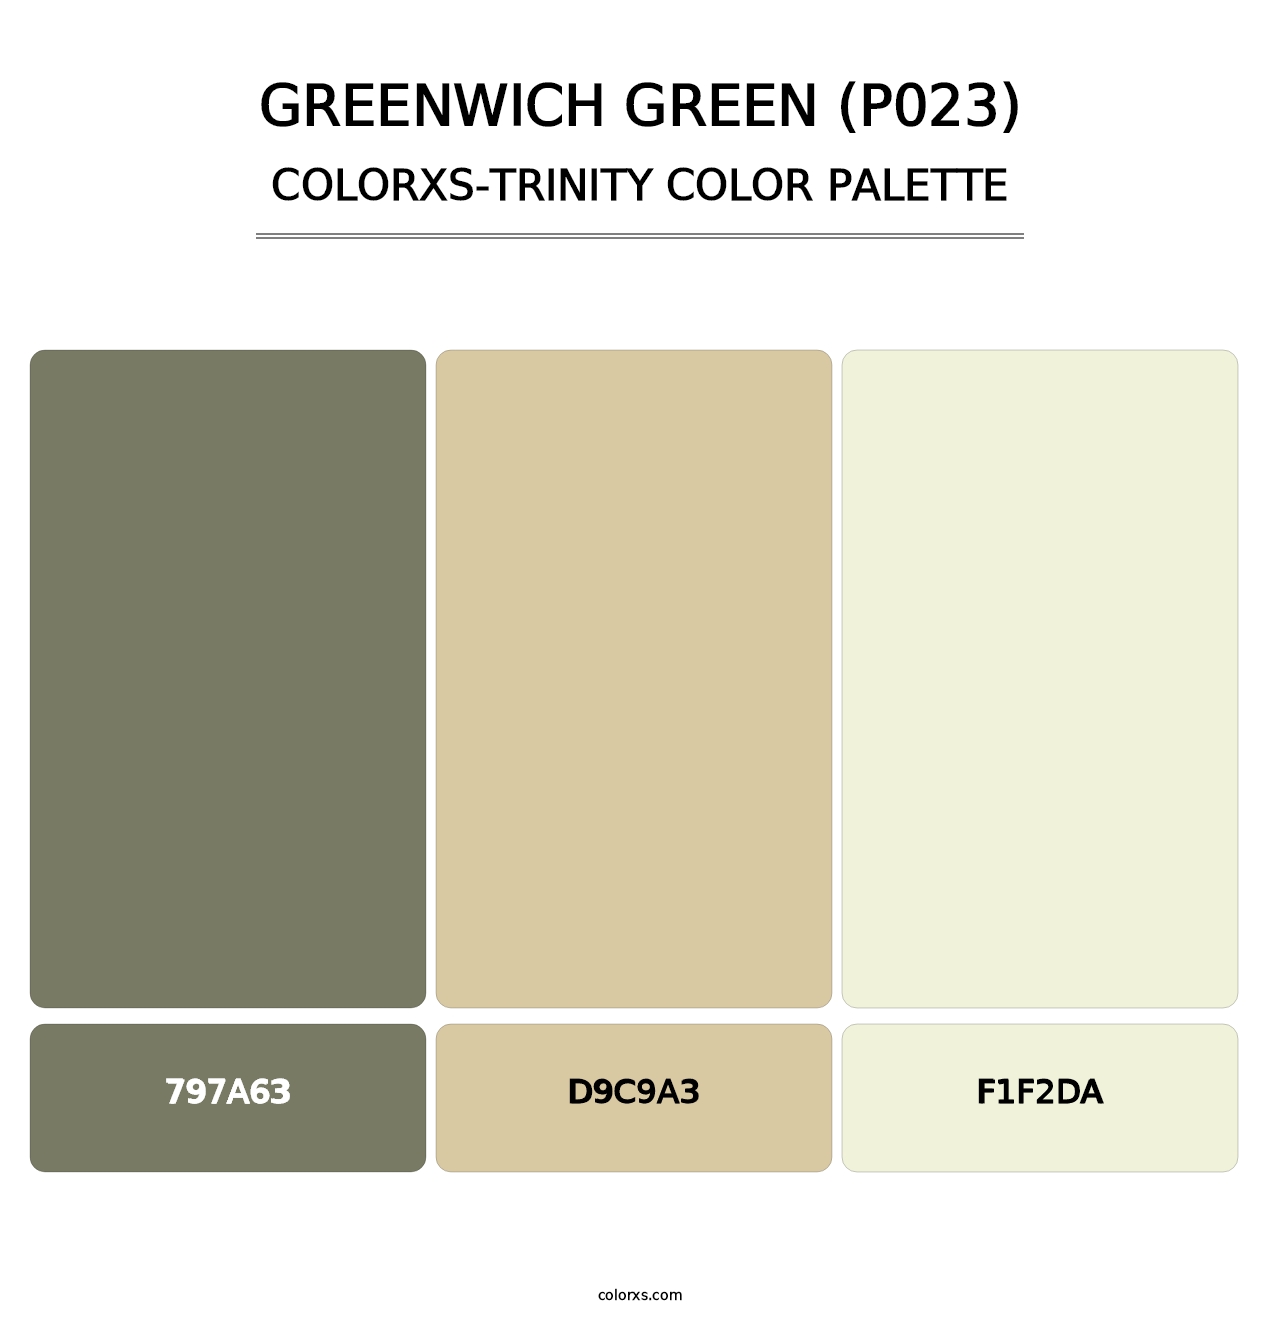 Greenwich Green (P023) - Colorxs Trinity Palette